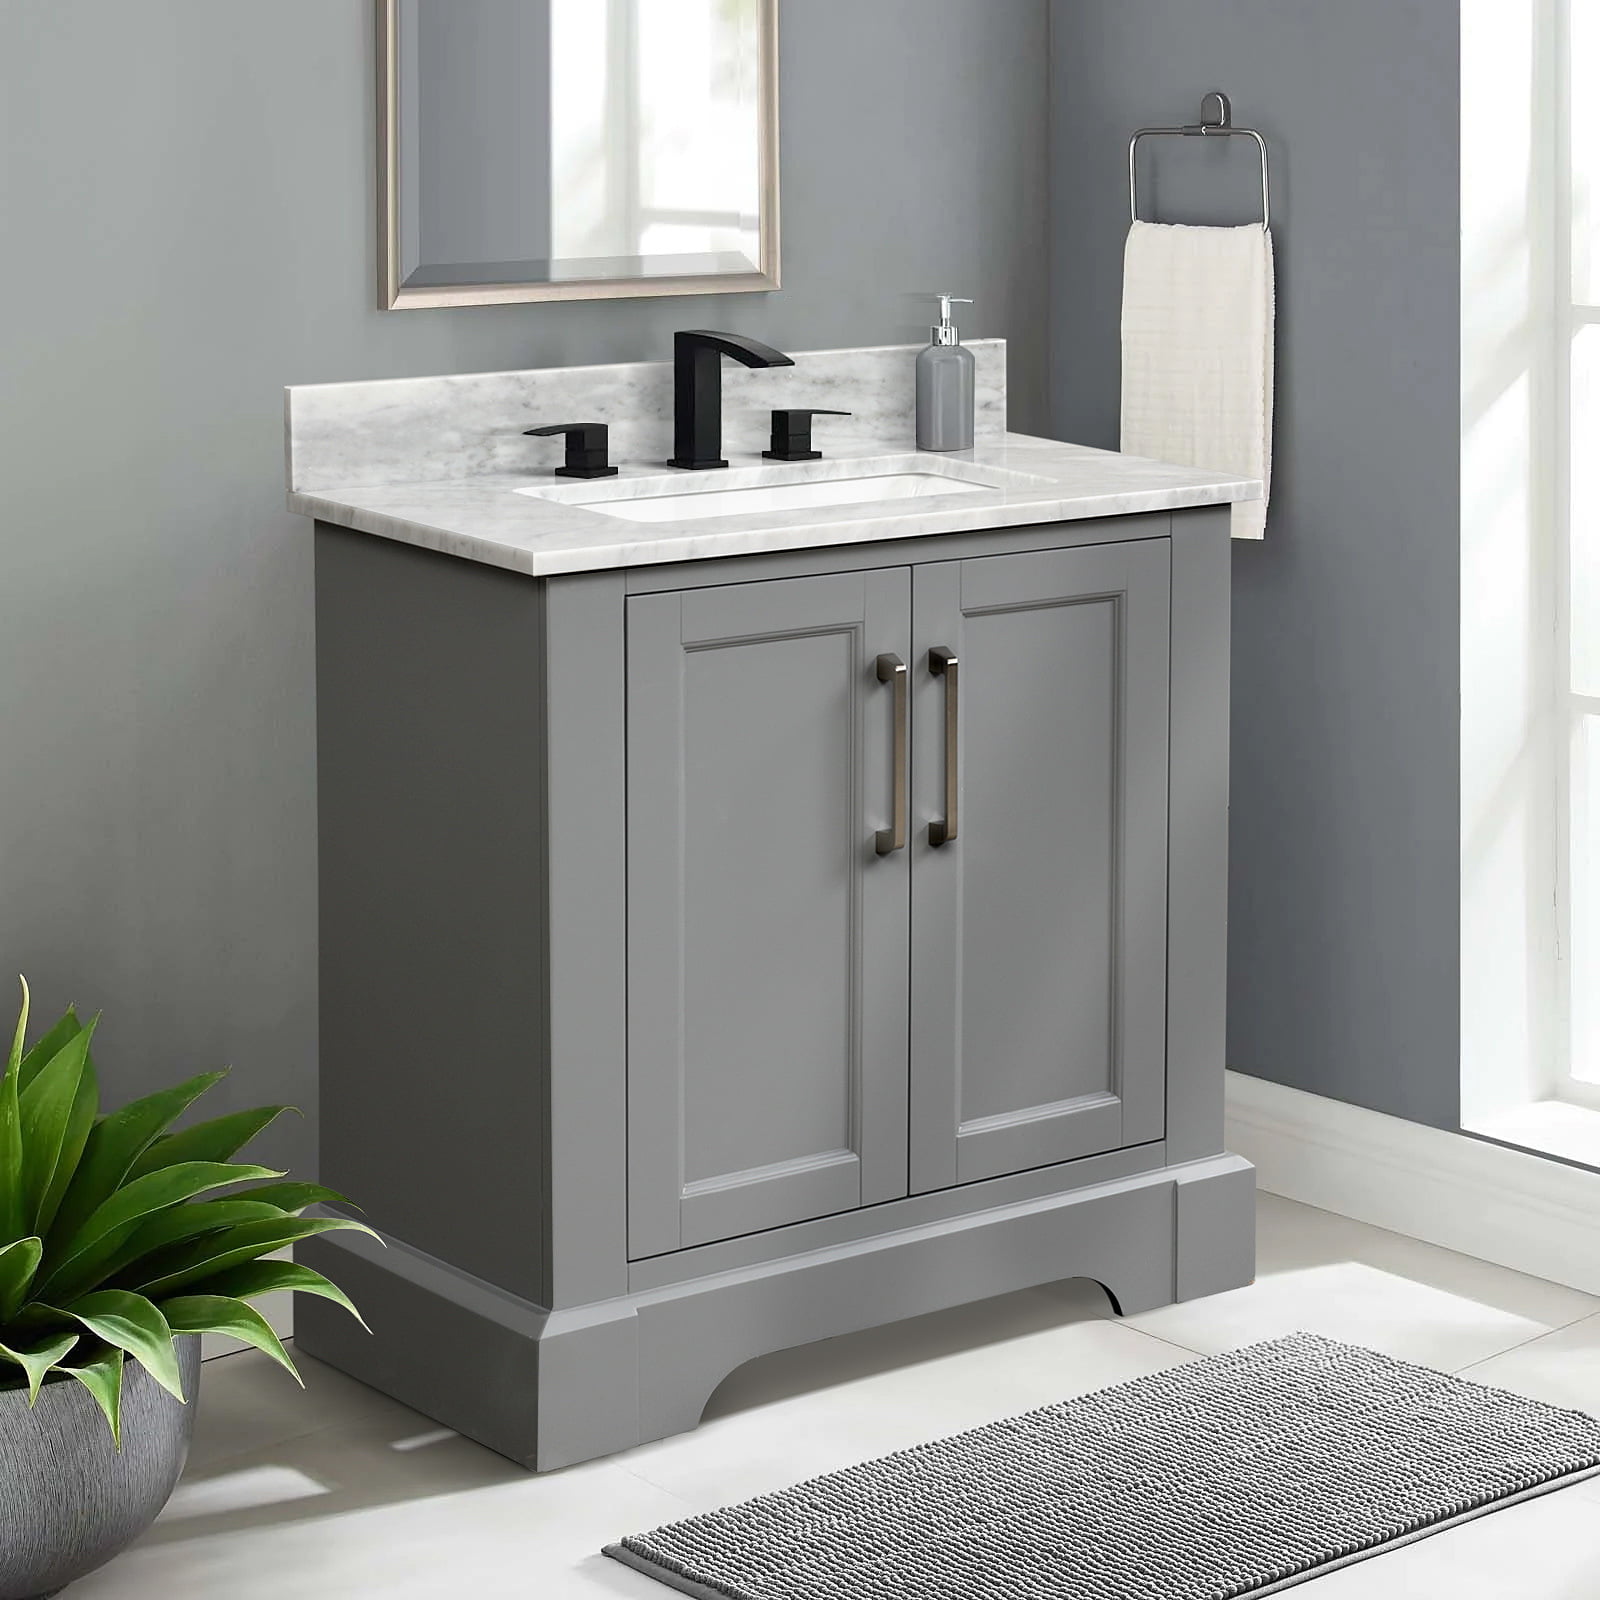 30" single solid wood bathroom vanity set, with drawers, carrara